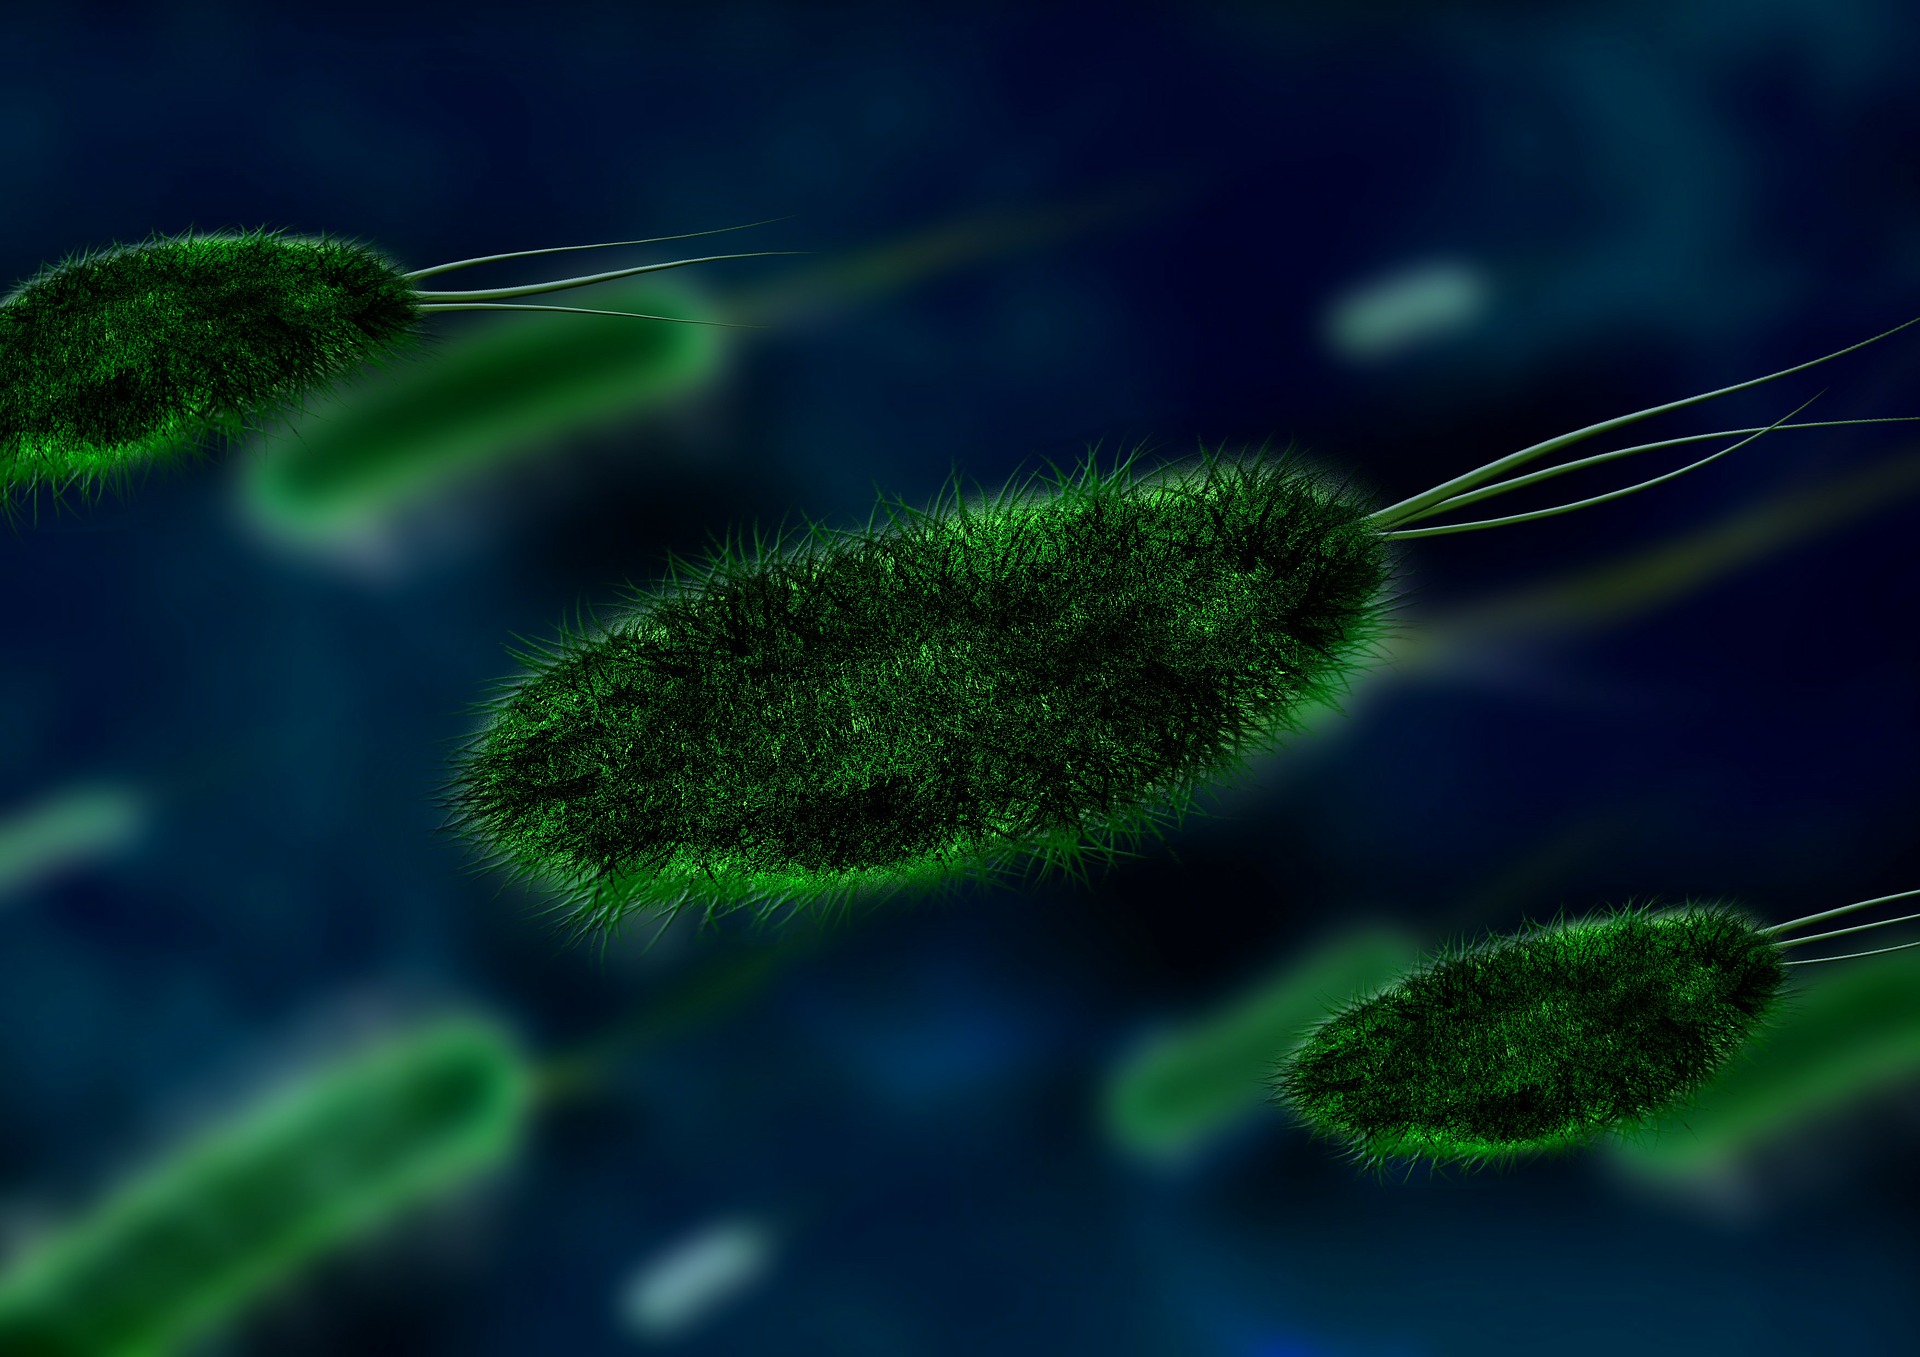 ecoli bacteria